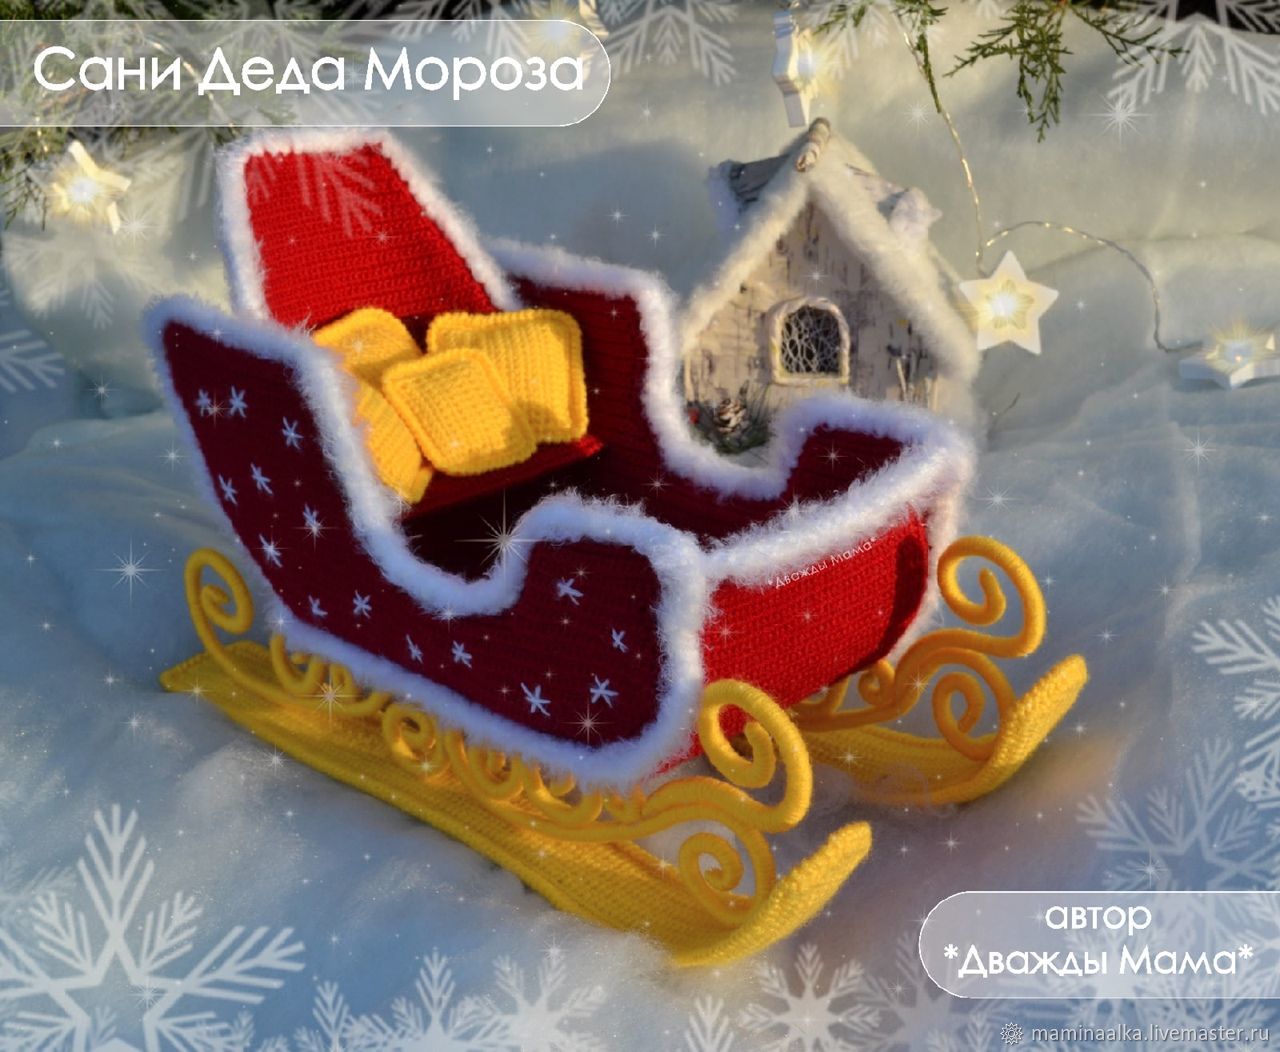 Сладкие новогодние сани Деда Мороза своими руками...